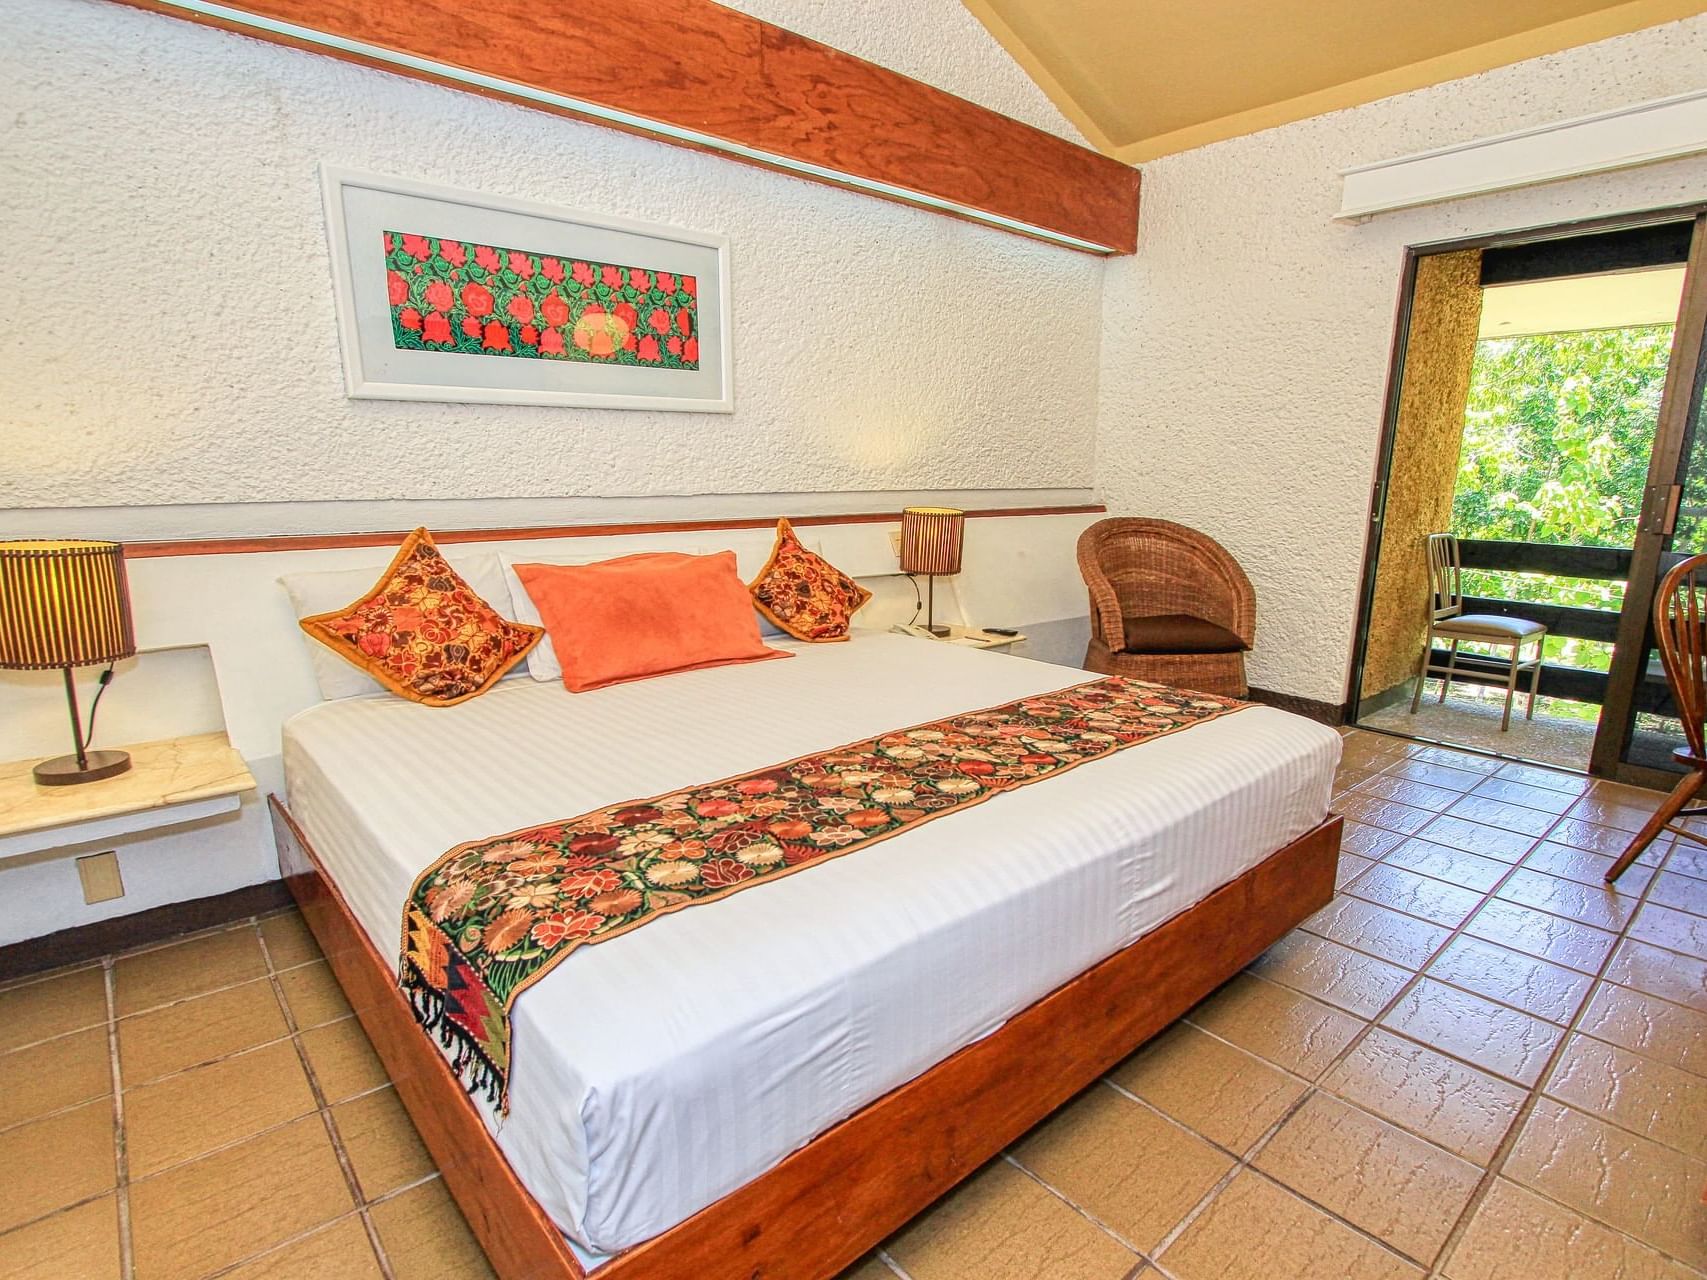 Bedroom arrangement in the Junior Room at Ciudad Real Palenque